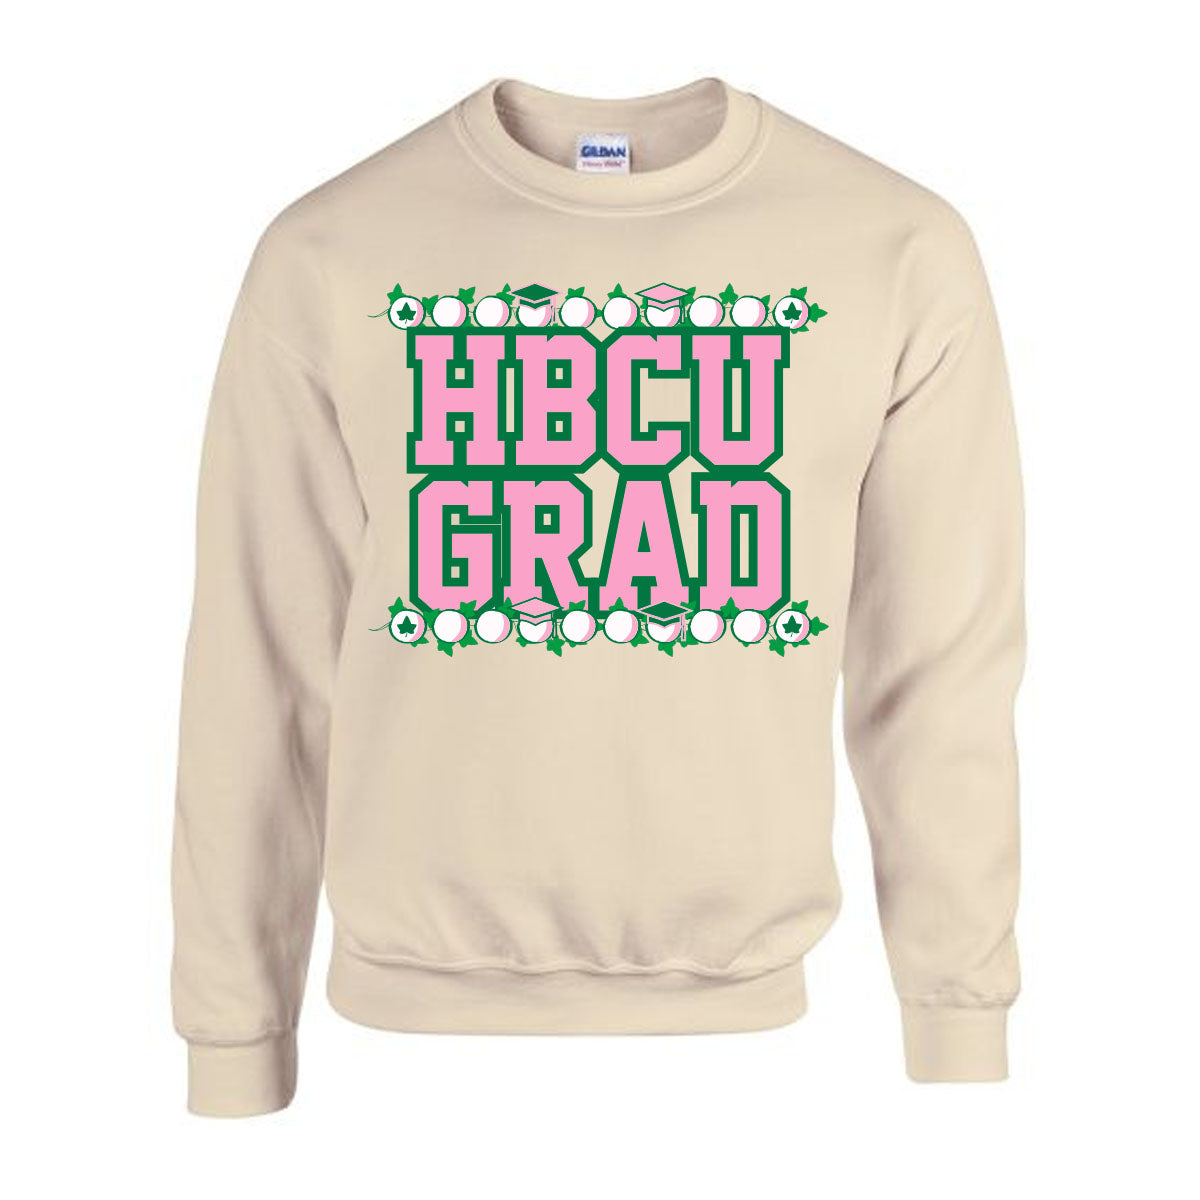 HBCU Grad | Signature Pearl 2 | Sweatshirt